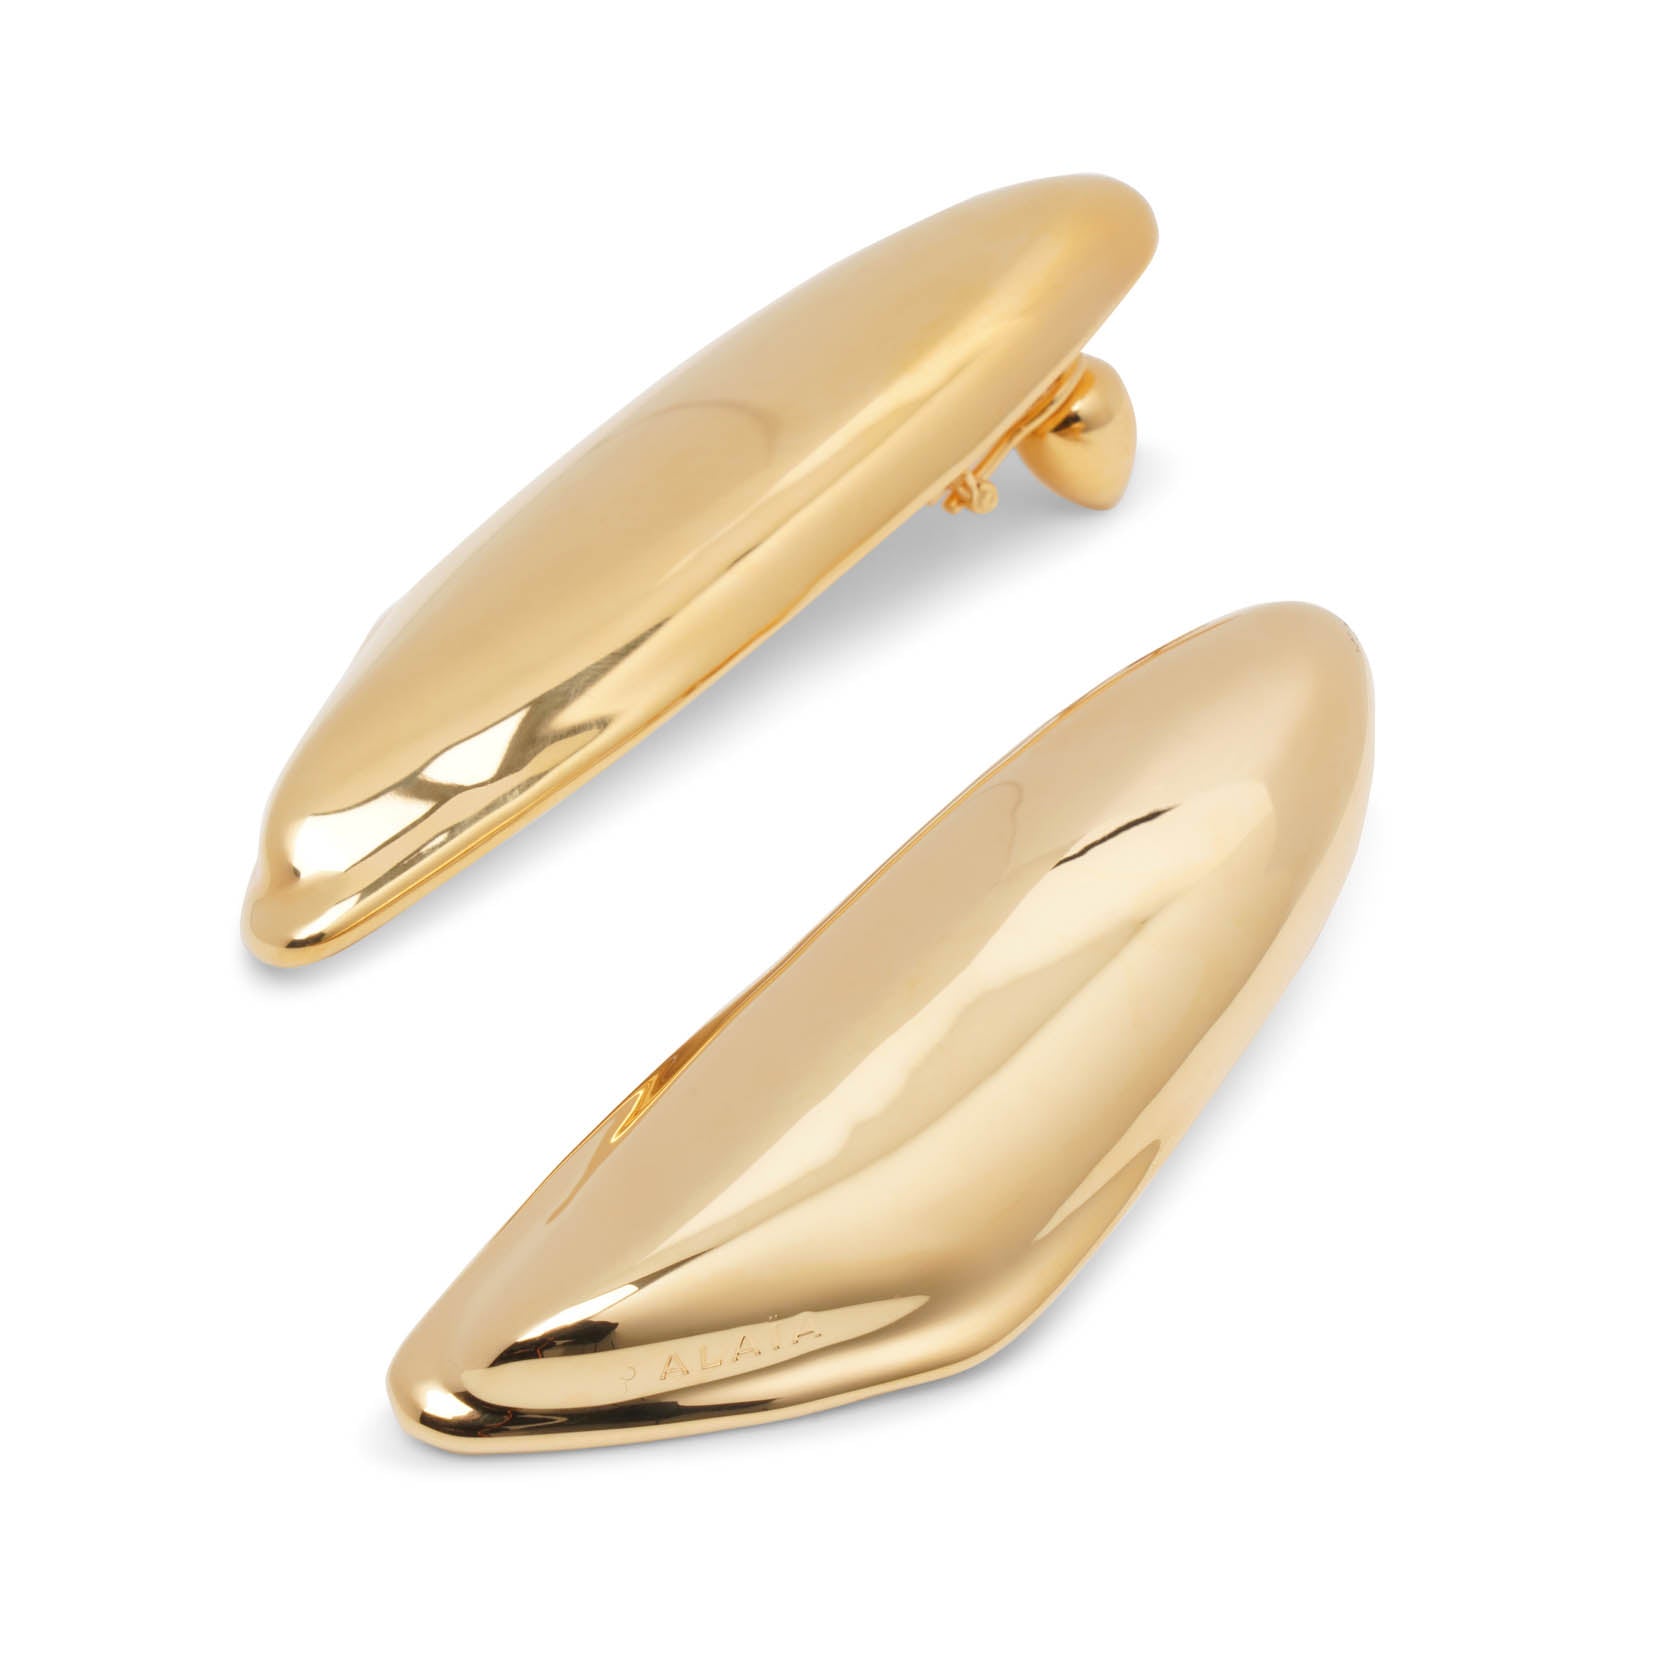 Shop Alaïa Bombe Gold Earrings